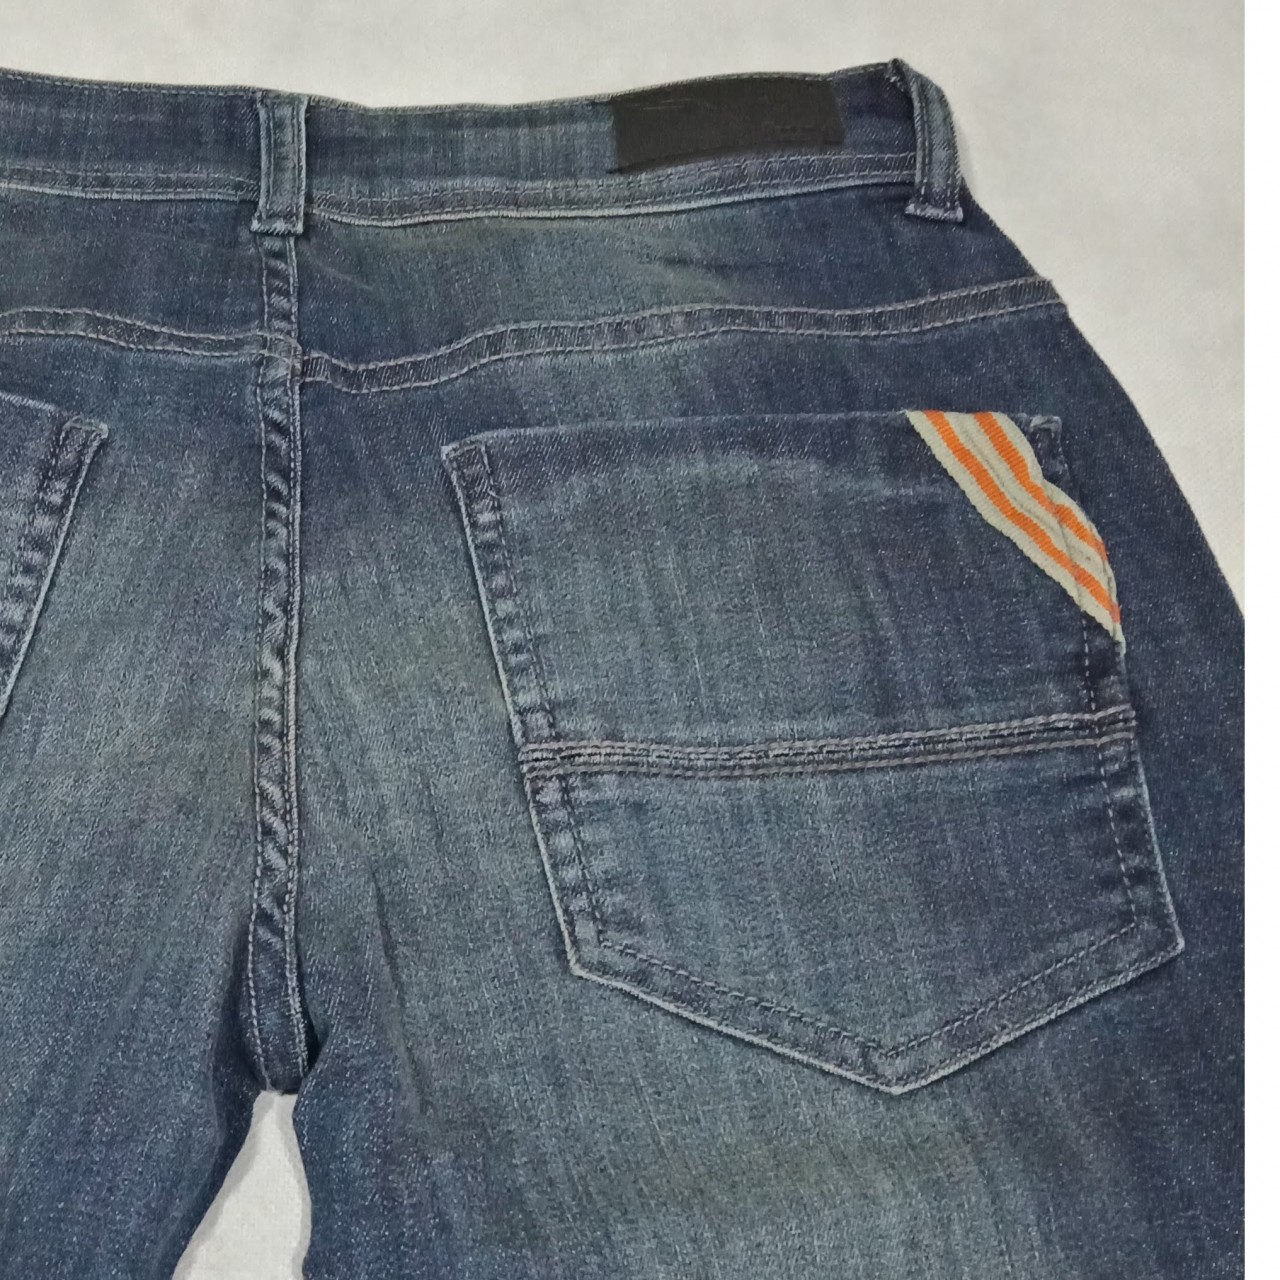 Faded Wash Slub Denim Jeans For Men - Dark Blue